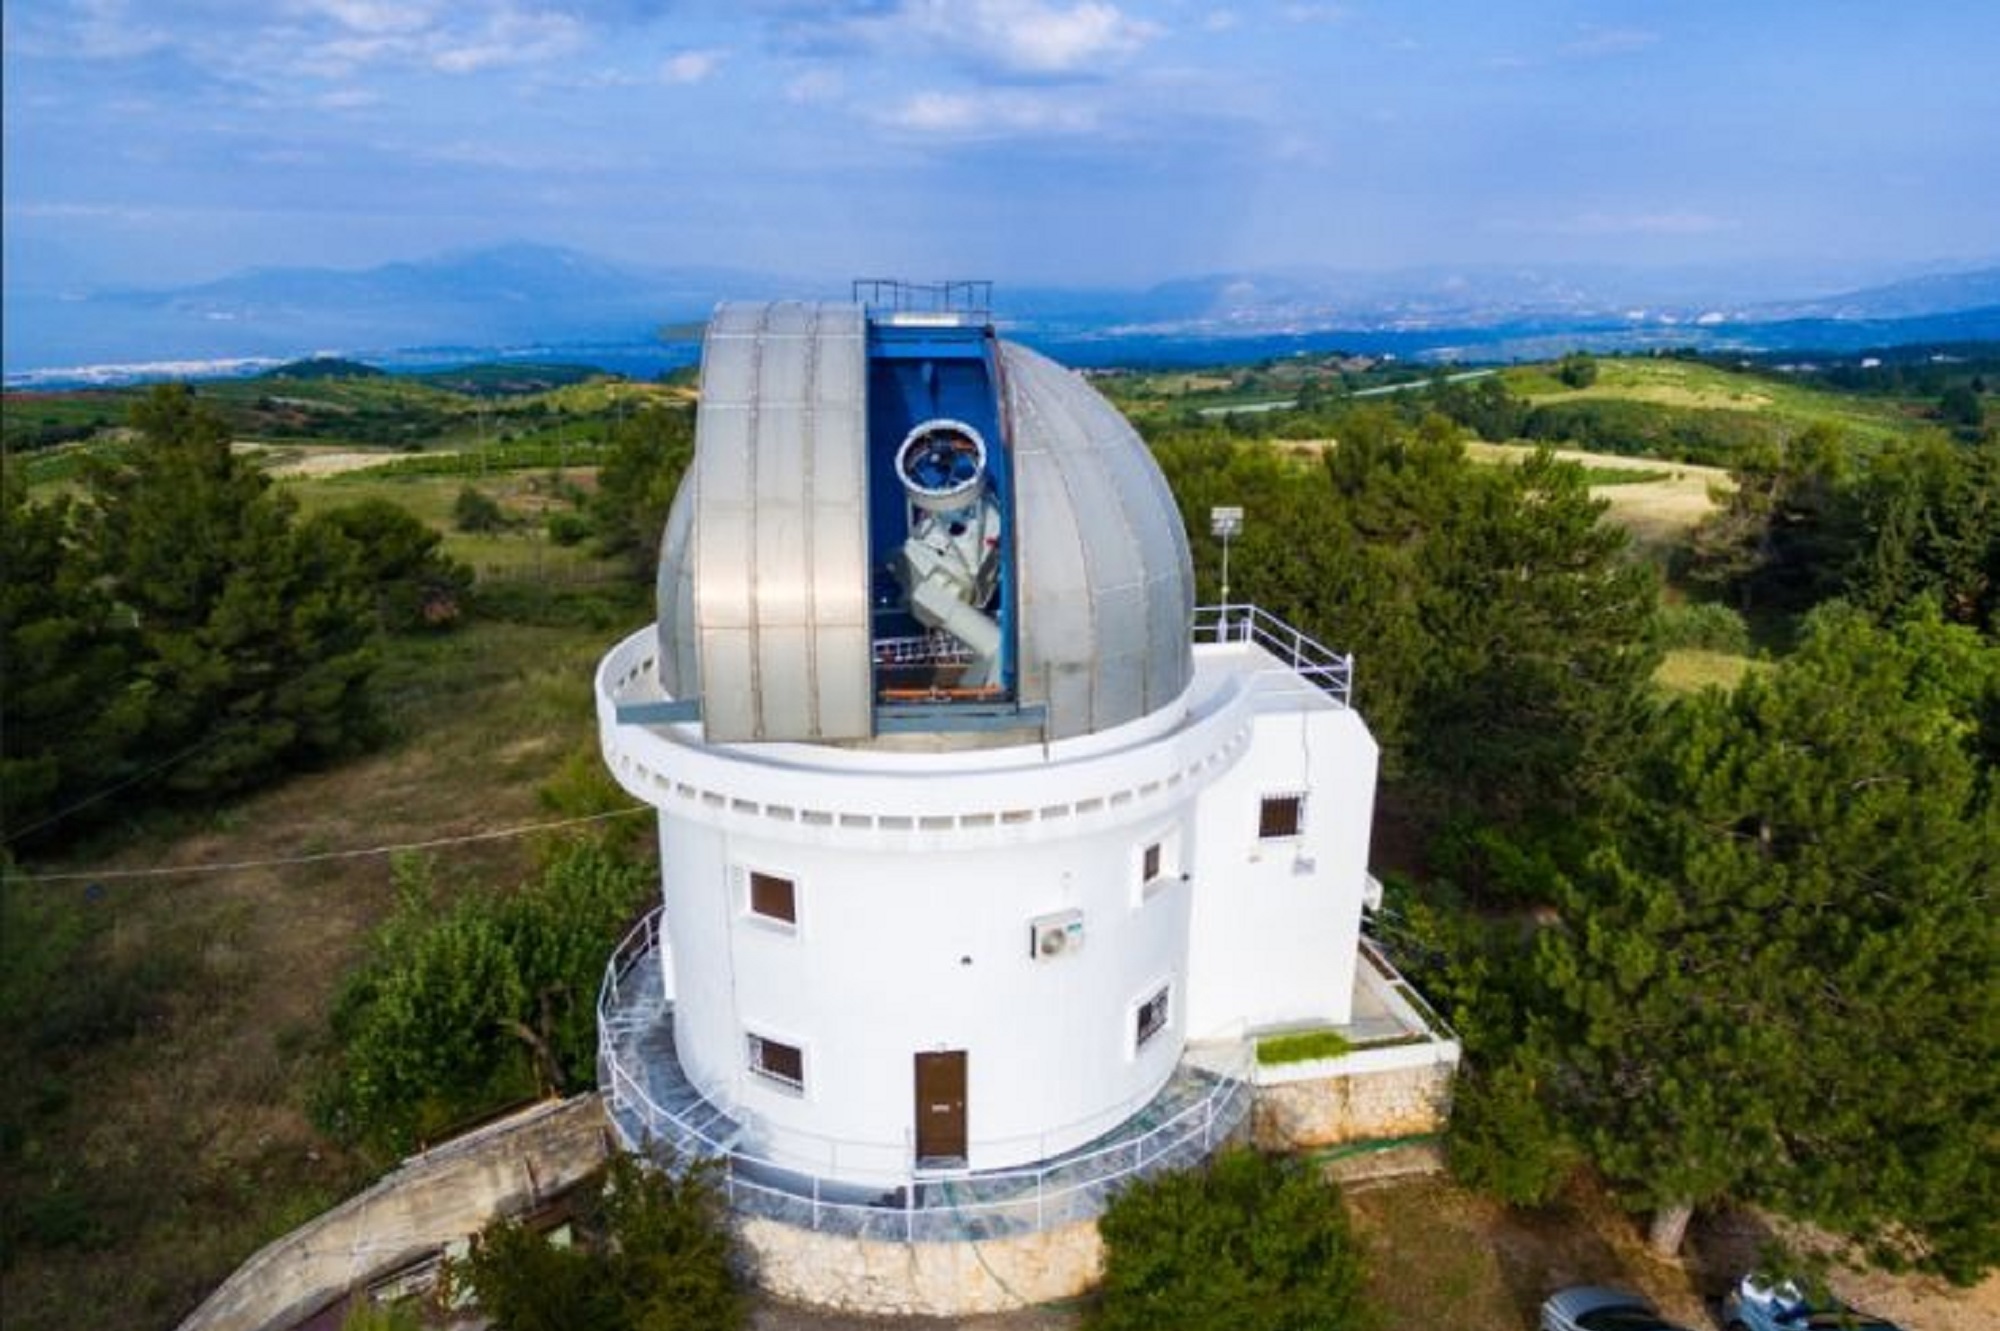 More information about "Το Αστεροσκοπείο Κρυονερίου στην Κορινθία γίνεται ο μεγαλύτερος διαστημικός κόμβος στη Νοτιοανατολική Ευρώπη"